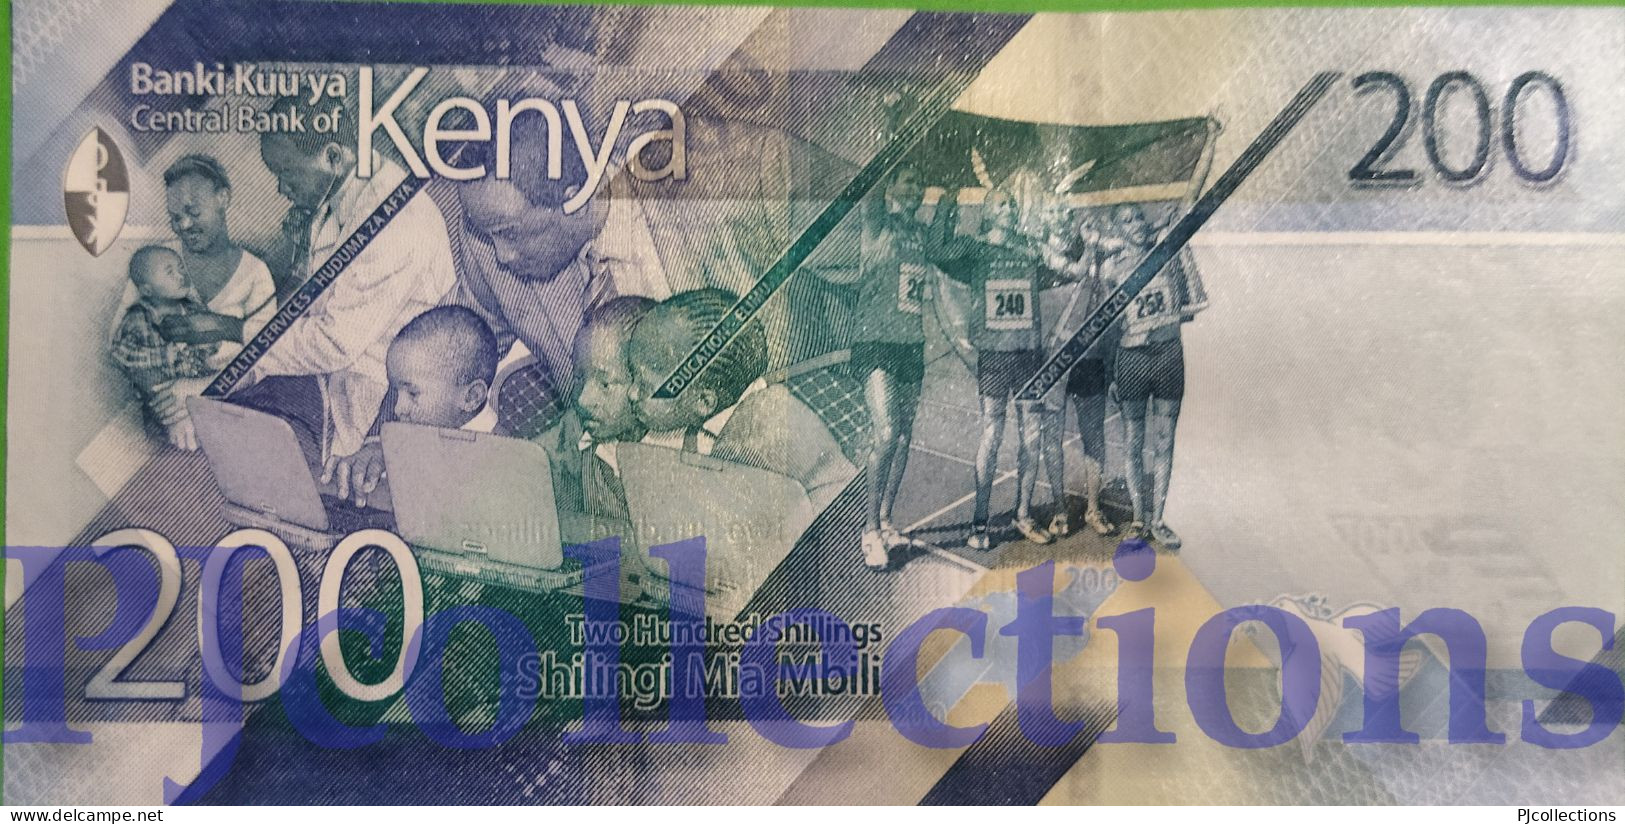 KENYA 200 SHILLINGS 2019 PICK 54 UNC PREFIX "AA" - Kenia